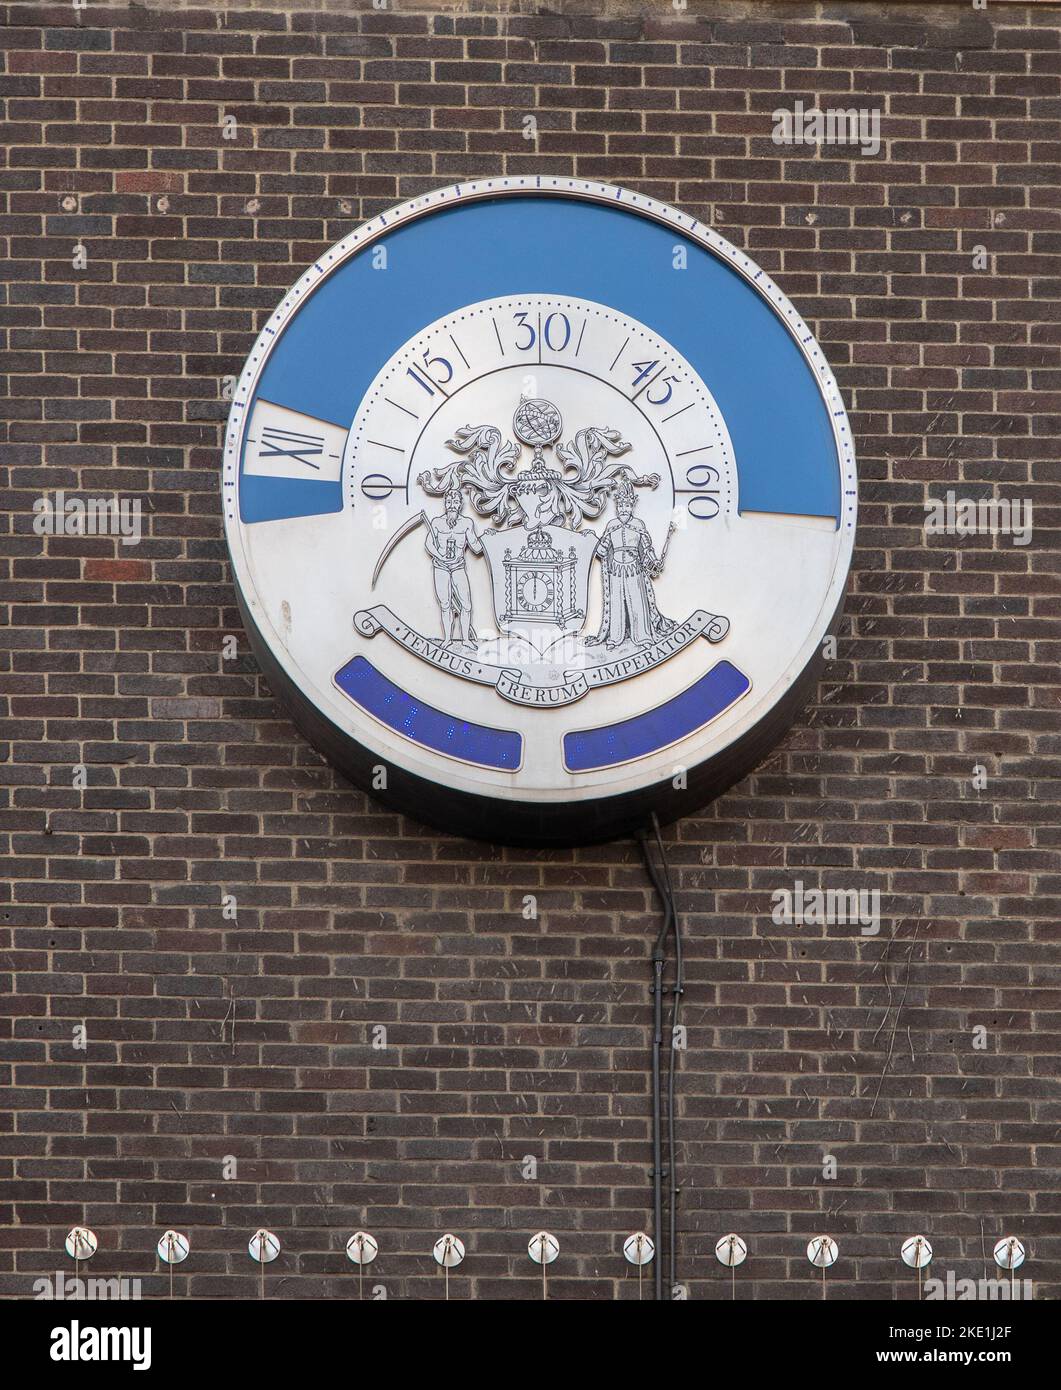 Un cliché vertical de l'horloge de rue Newgate installée en 2007 sur un mur de briques Banque D'Images